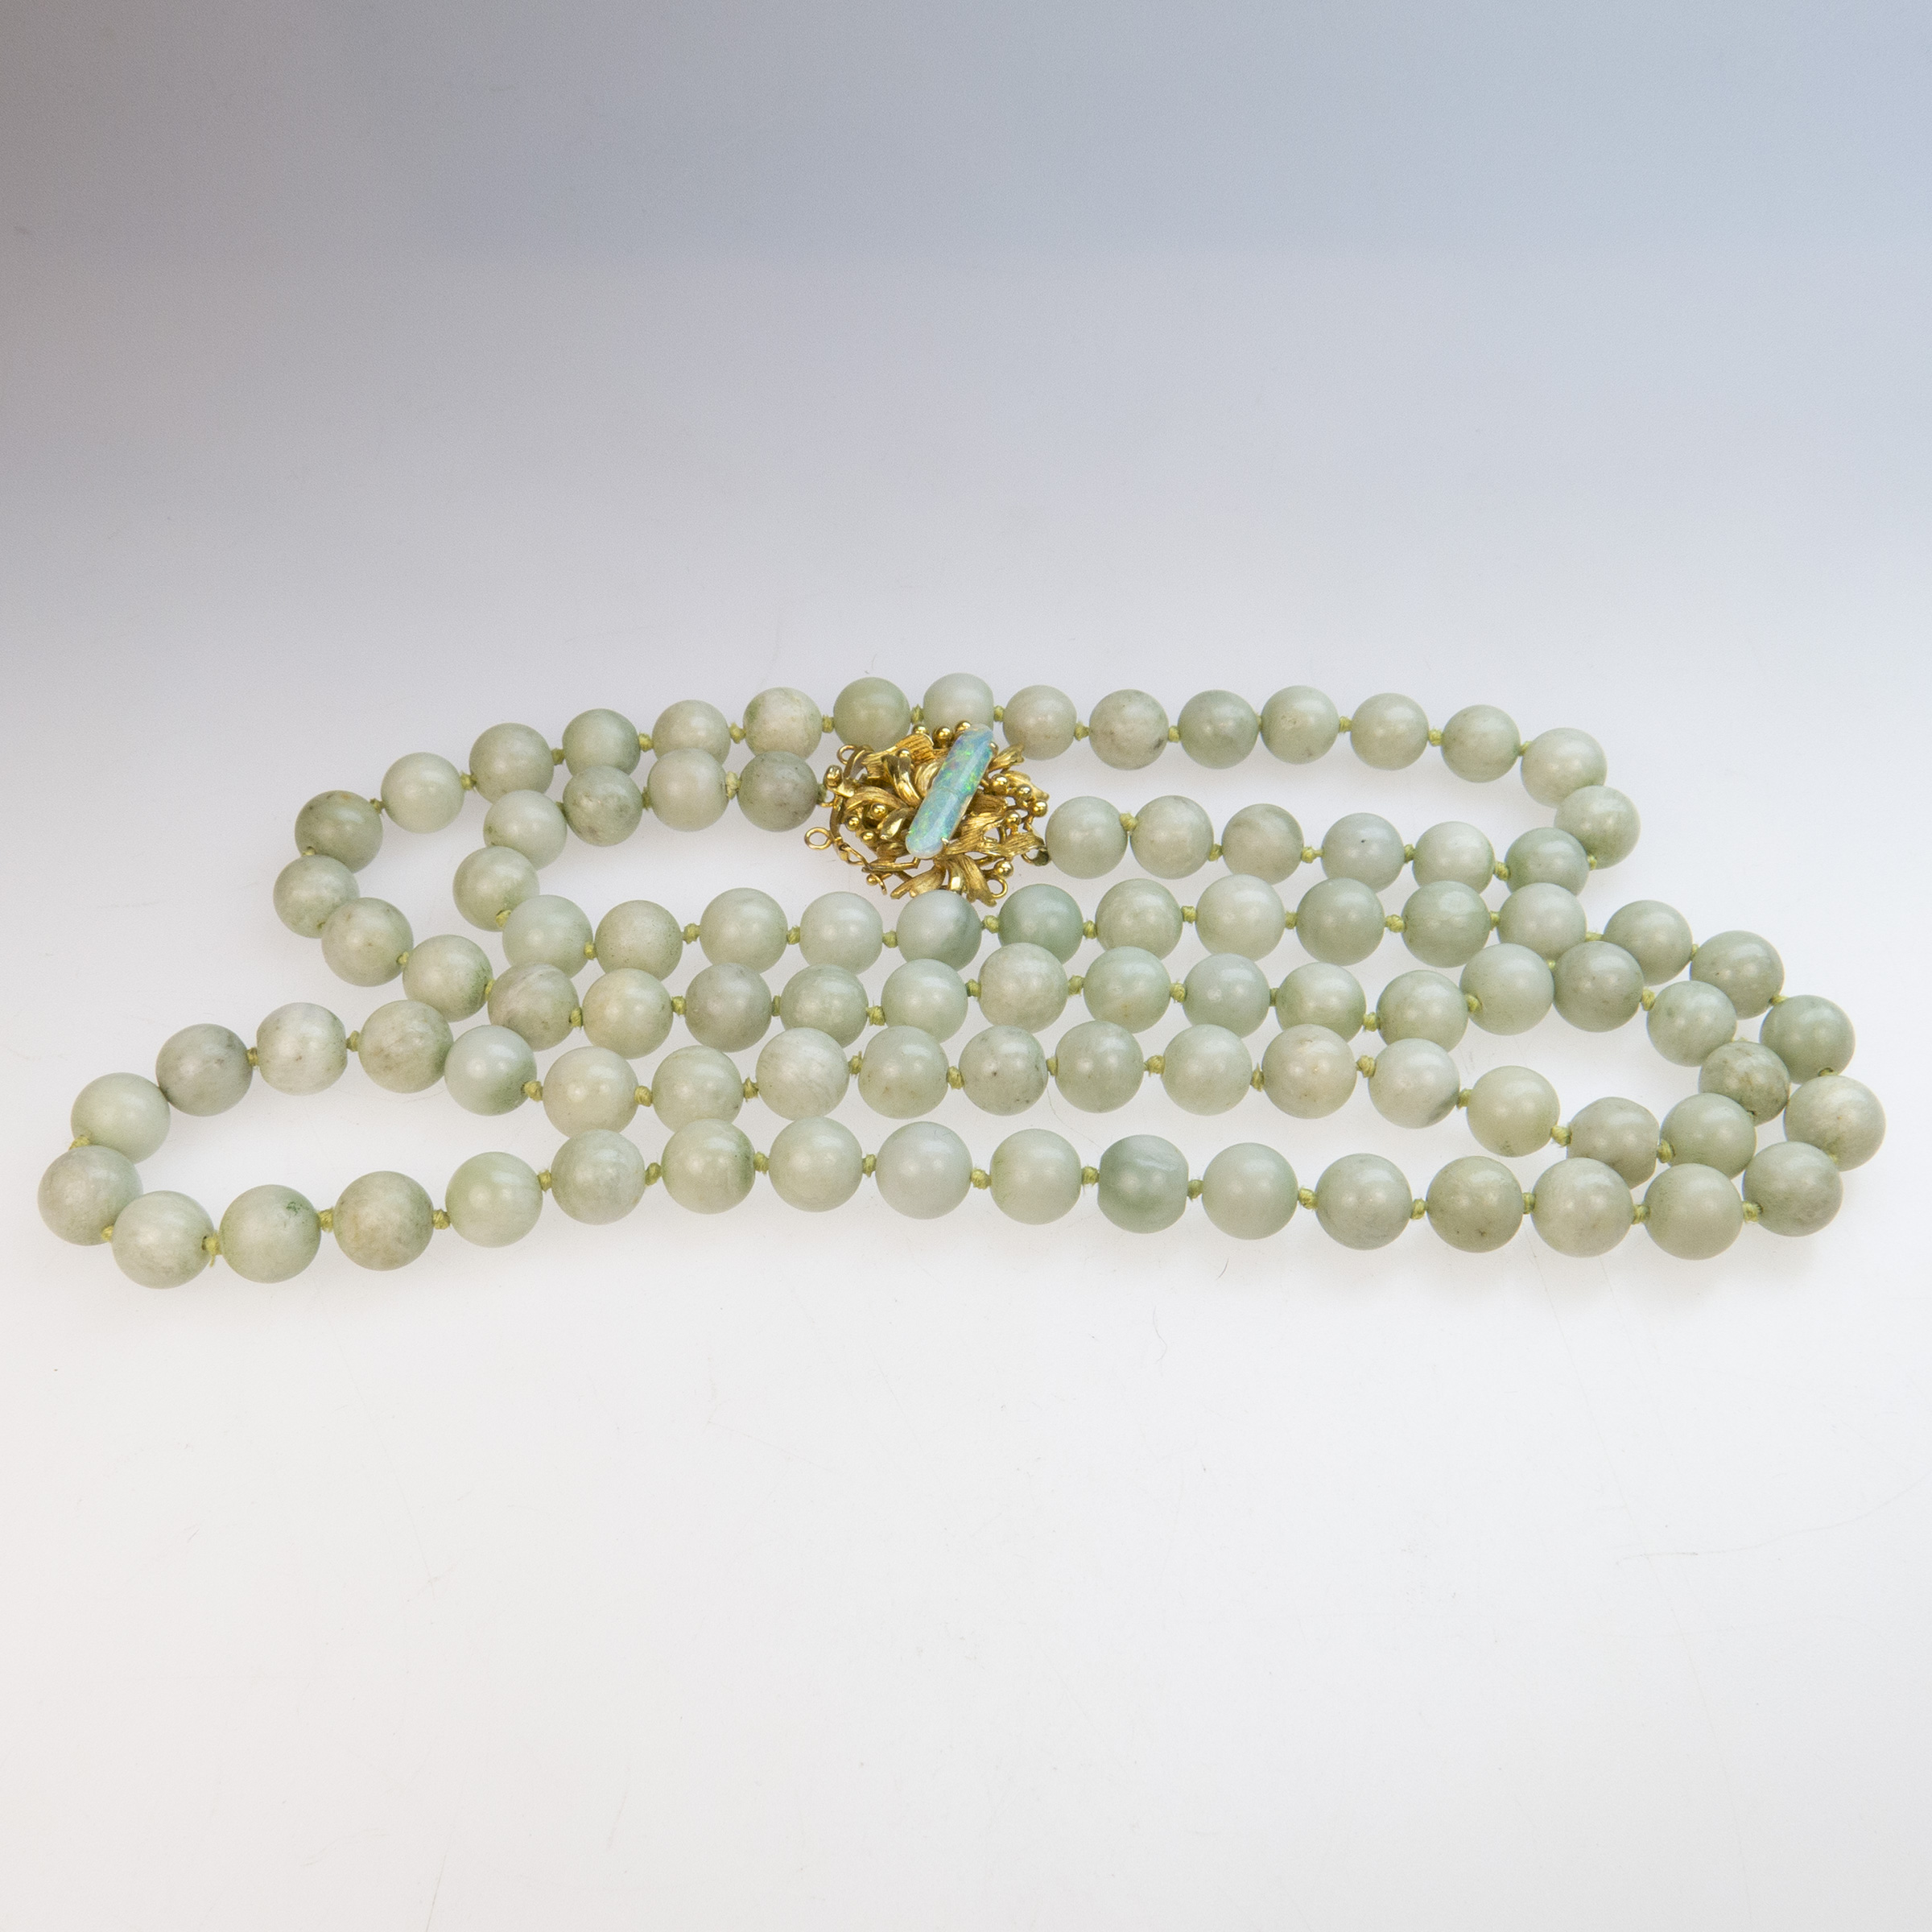 Single Strand Of Pale Green Hardstone Beads